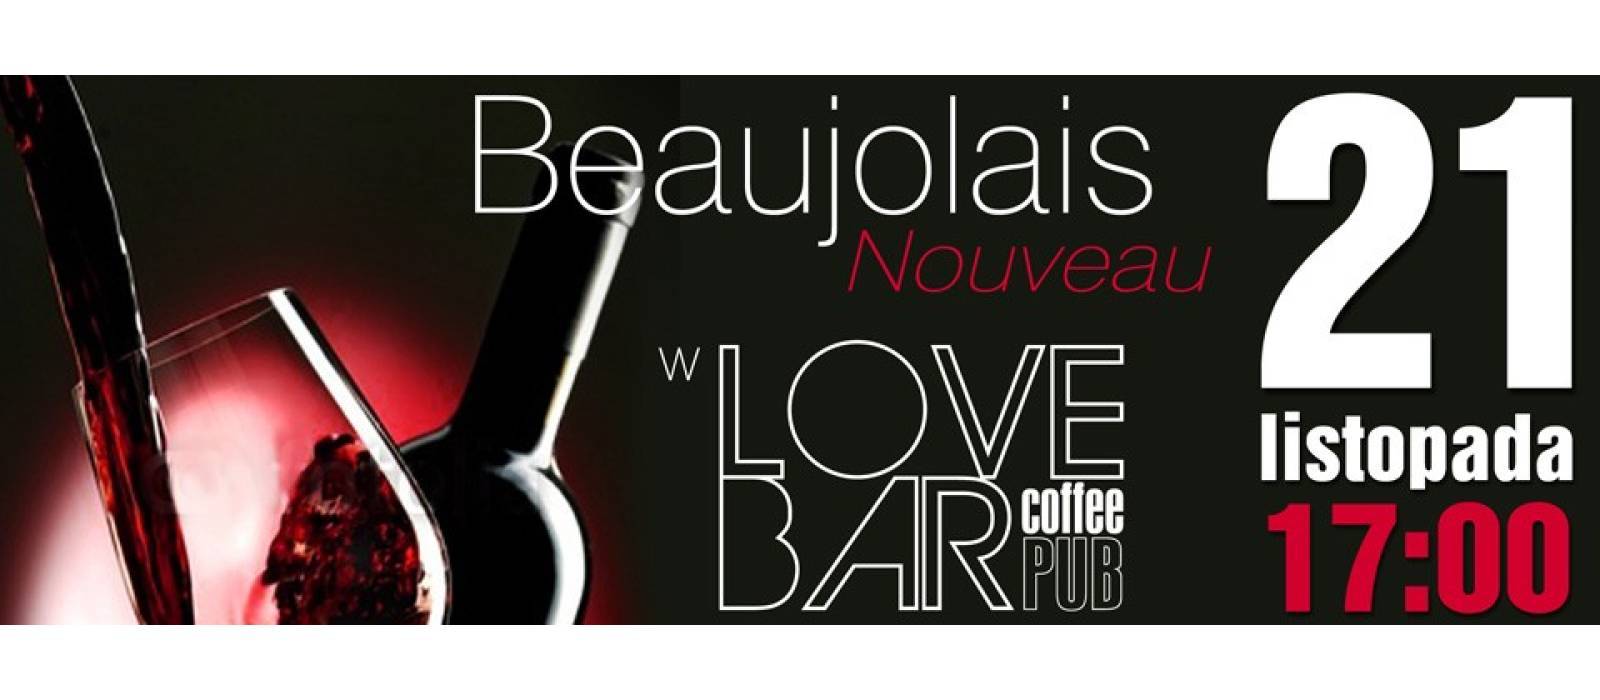 Beaujolais Nouveau 2013 w LOVE BAR - 1